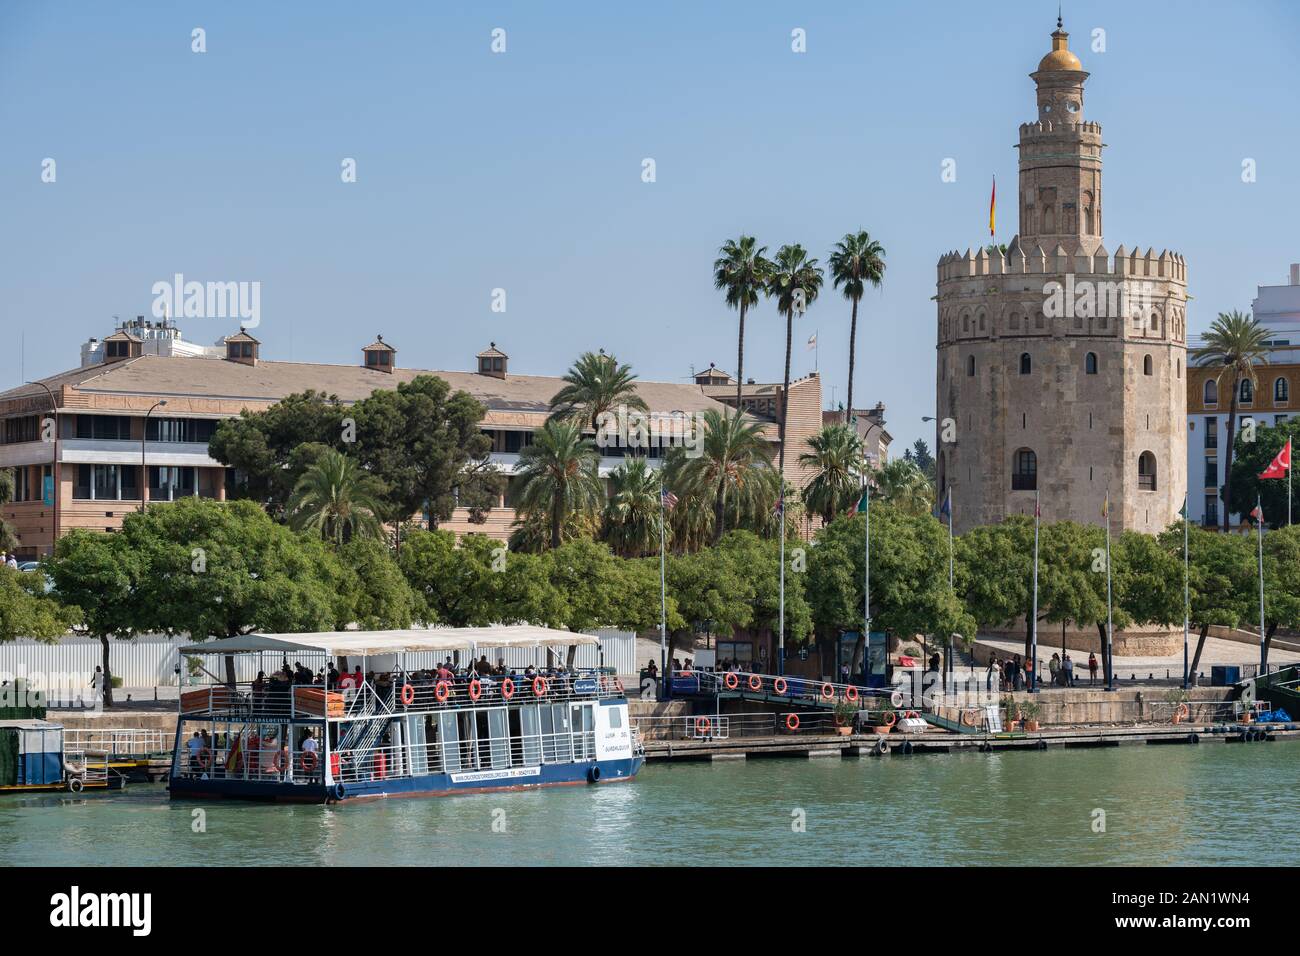 Sevillas Wachturm Torre del Oro mit Blick auf die Bootsstege am Nordufer des Flusses Guadalquivir. Stockfoto